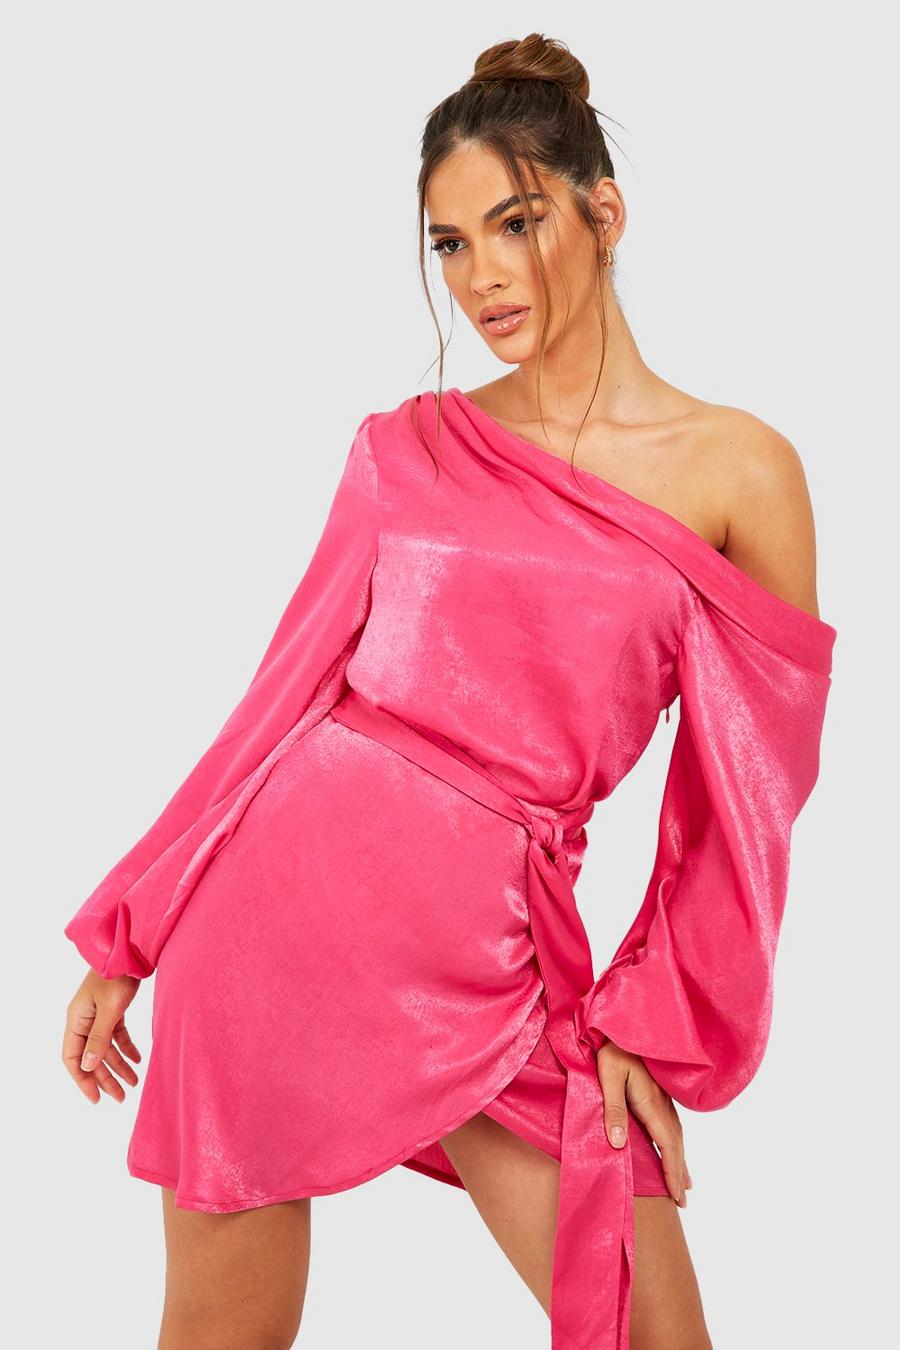 Einärmliges drapiertes Satin-Minikleid, Hot pink image number 1